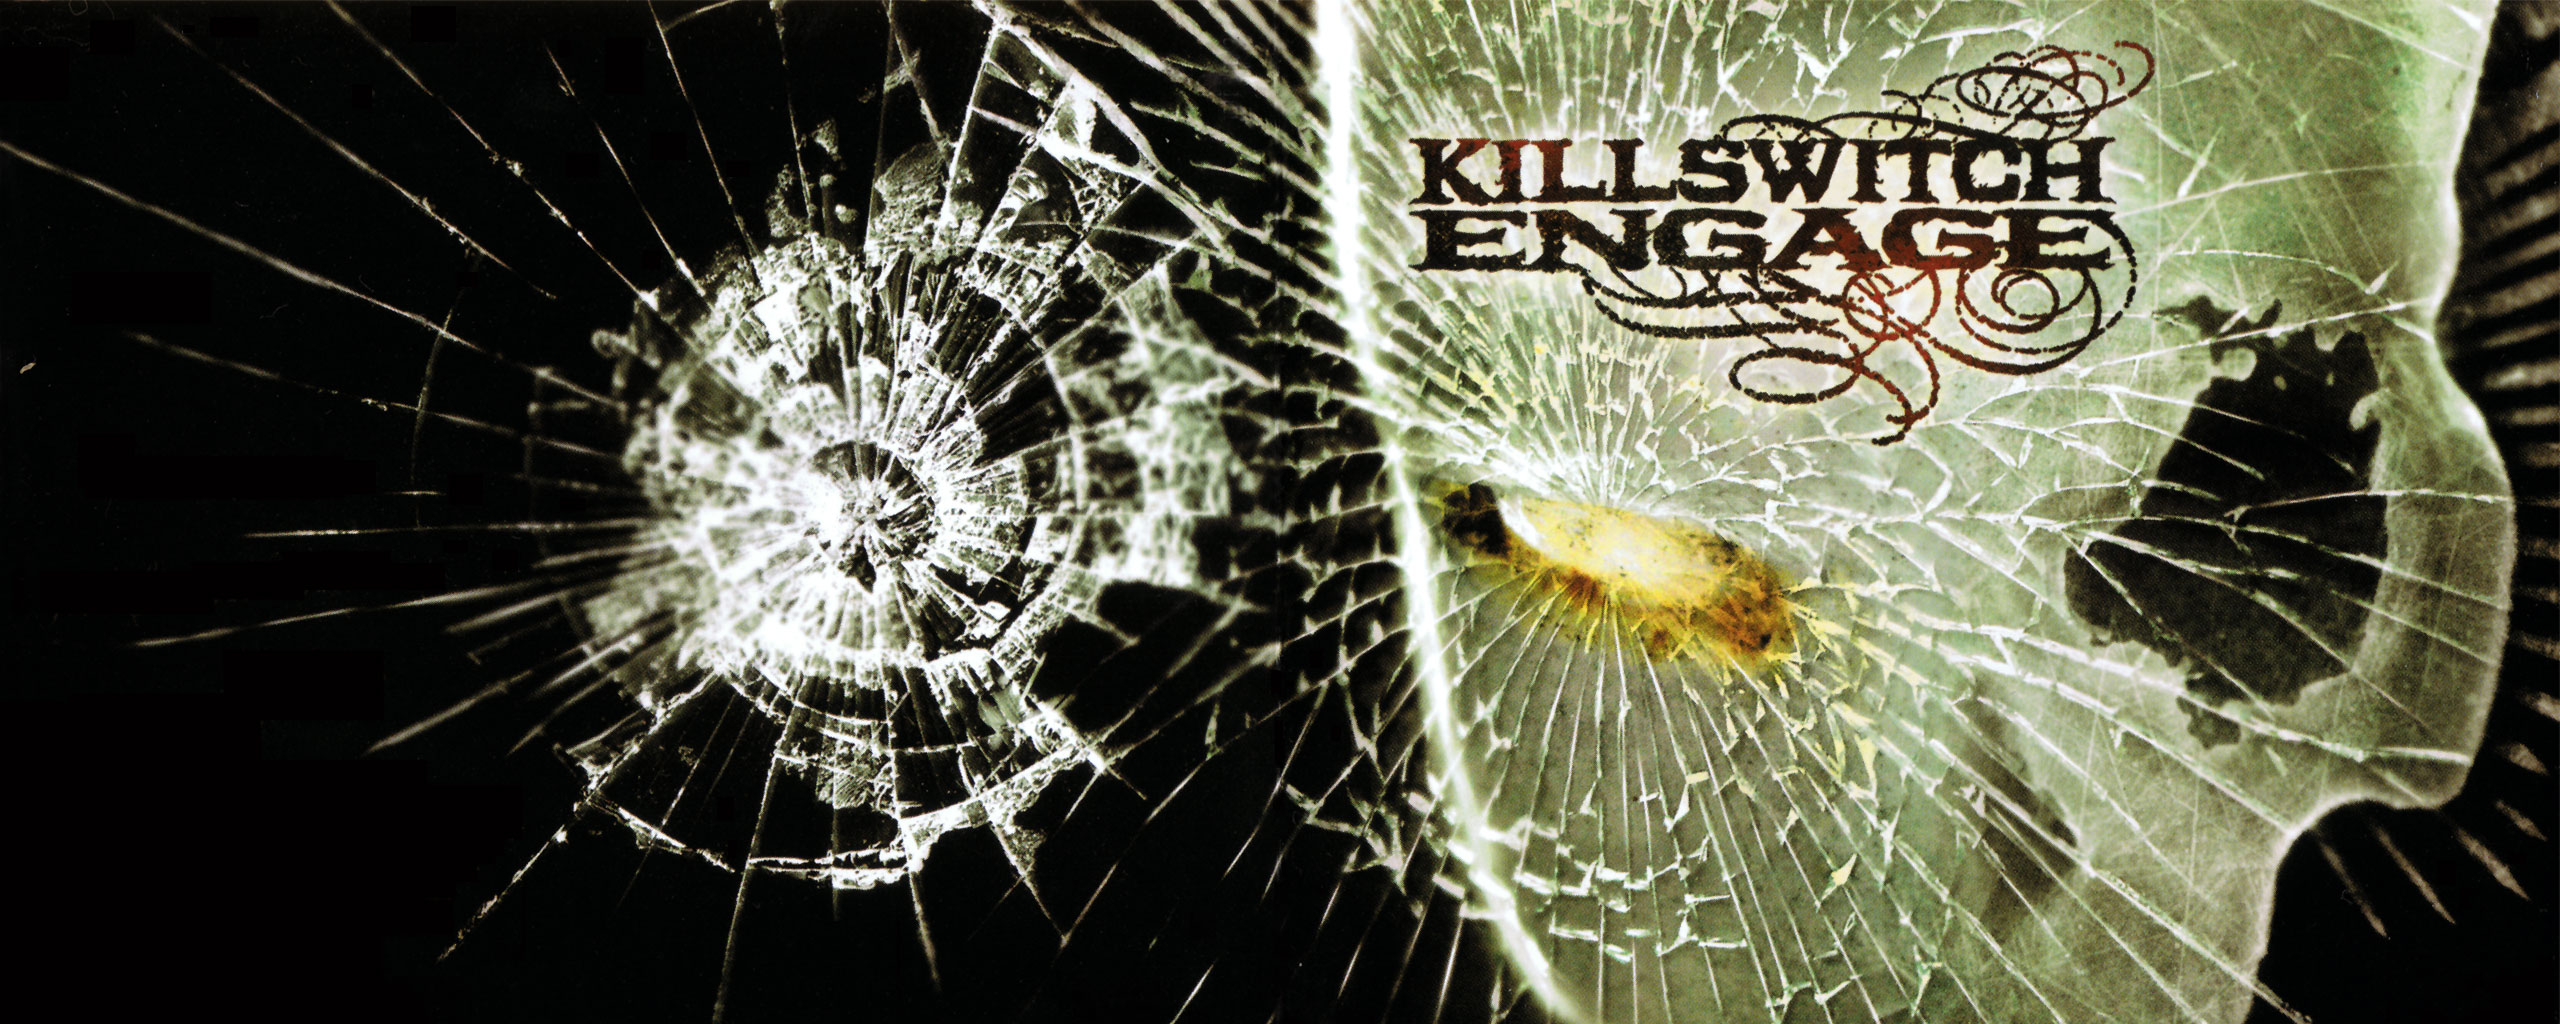 Music Killswitch Engage Wallpaper